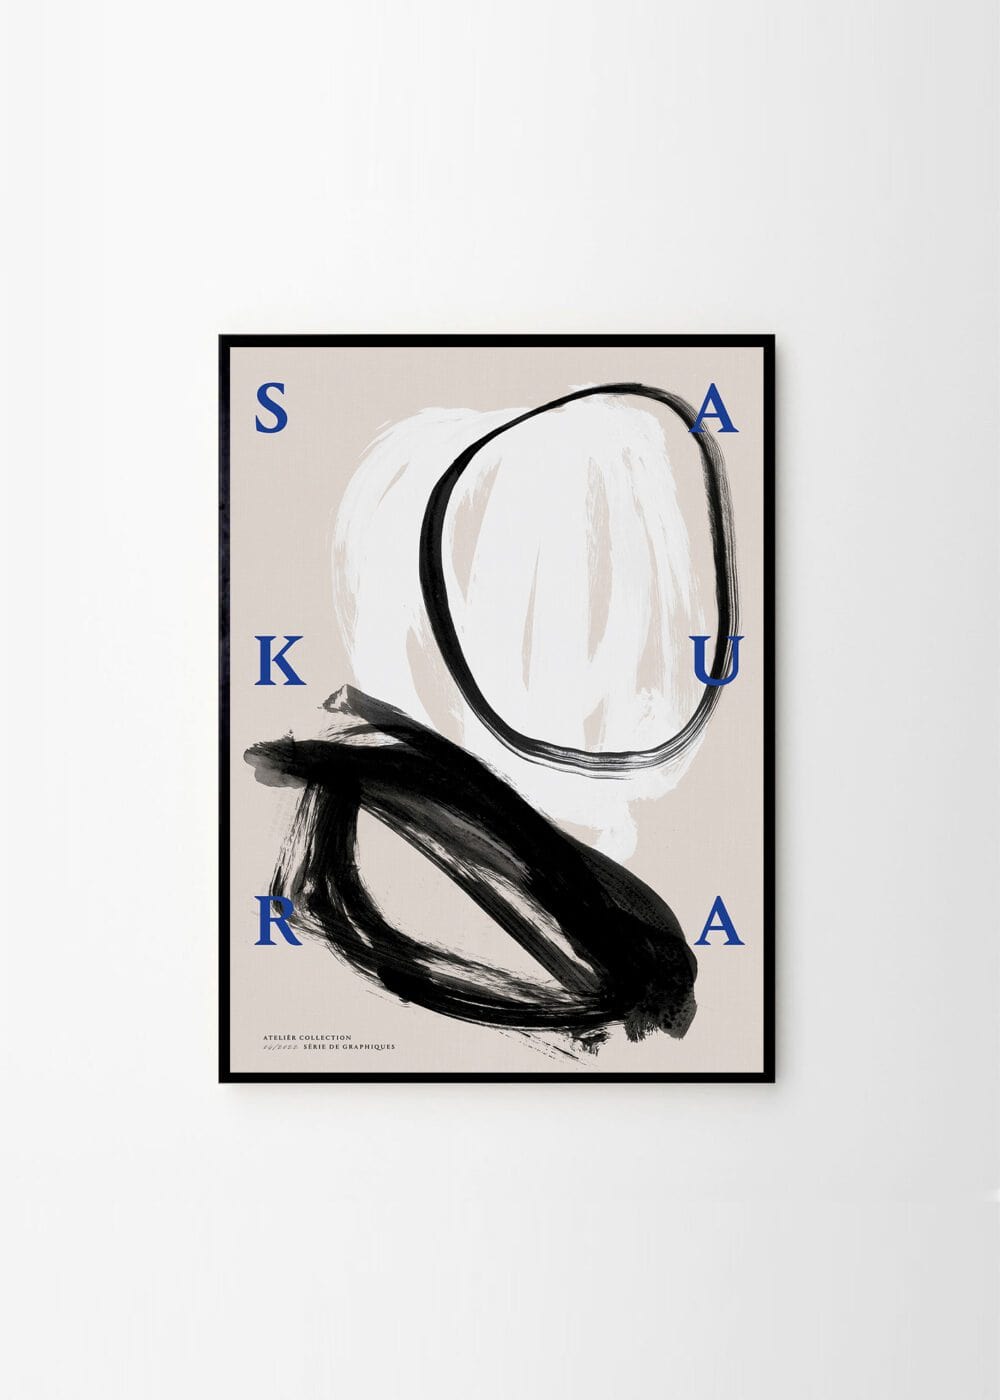 THE POSTER CLUB Poster Πόστερ, Sakura, Julia Hallström Hjort, (70x100)cm, Μπλέ/Μάυρο/Εκρού, Sustainable Paper, THE POSTER CLUB